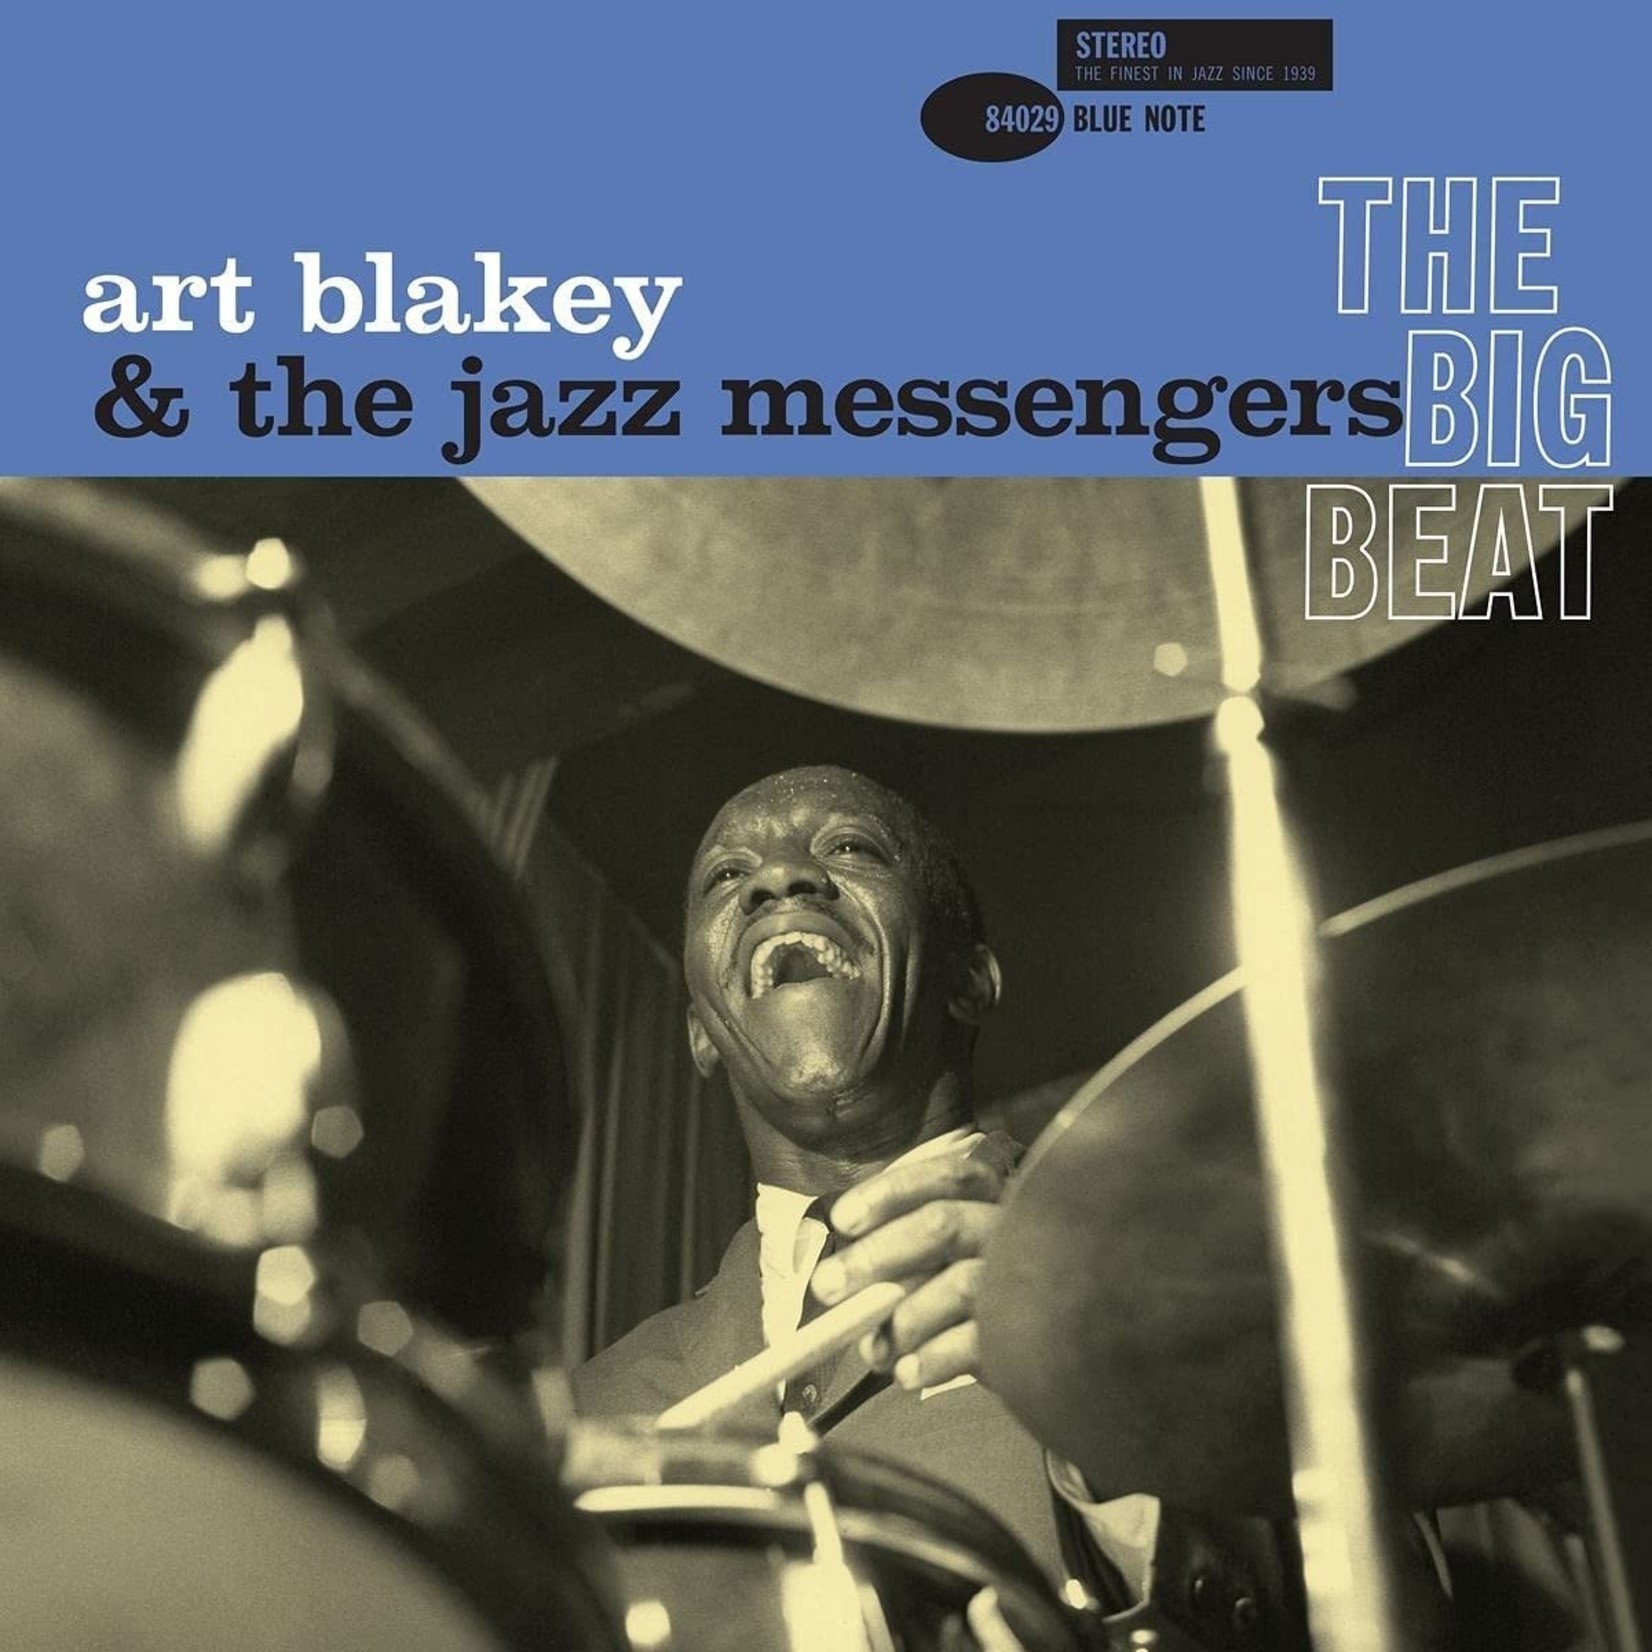 Art Blakey & The Jazz Messengers - The Big Beat (Not Now Music) (180g)